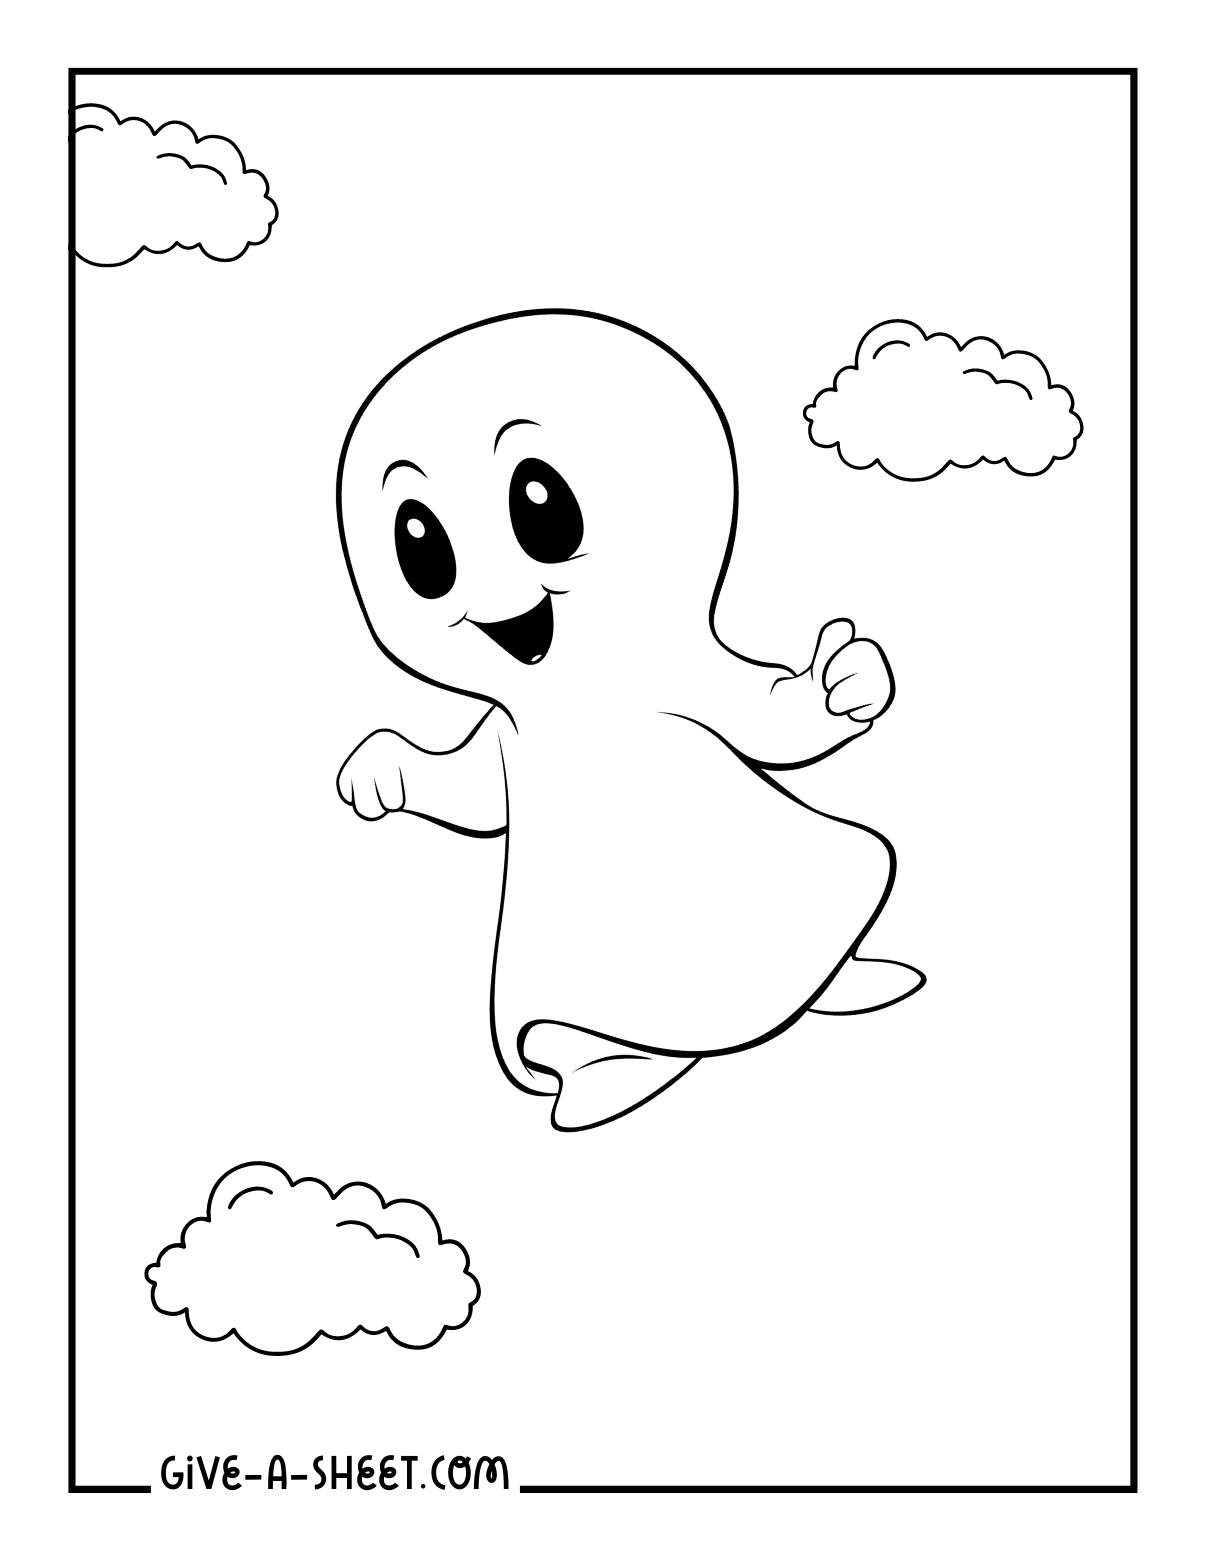 Casper cute friendly ghost coloring sheet for kids.